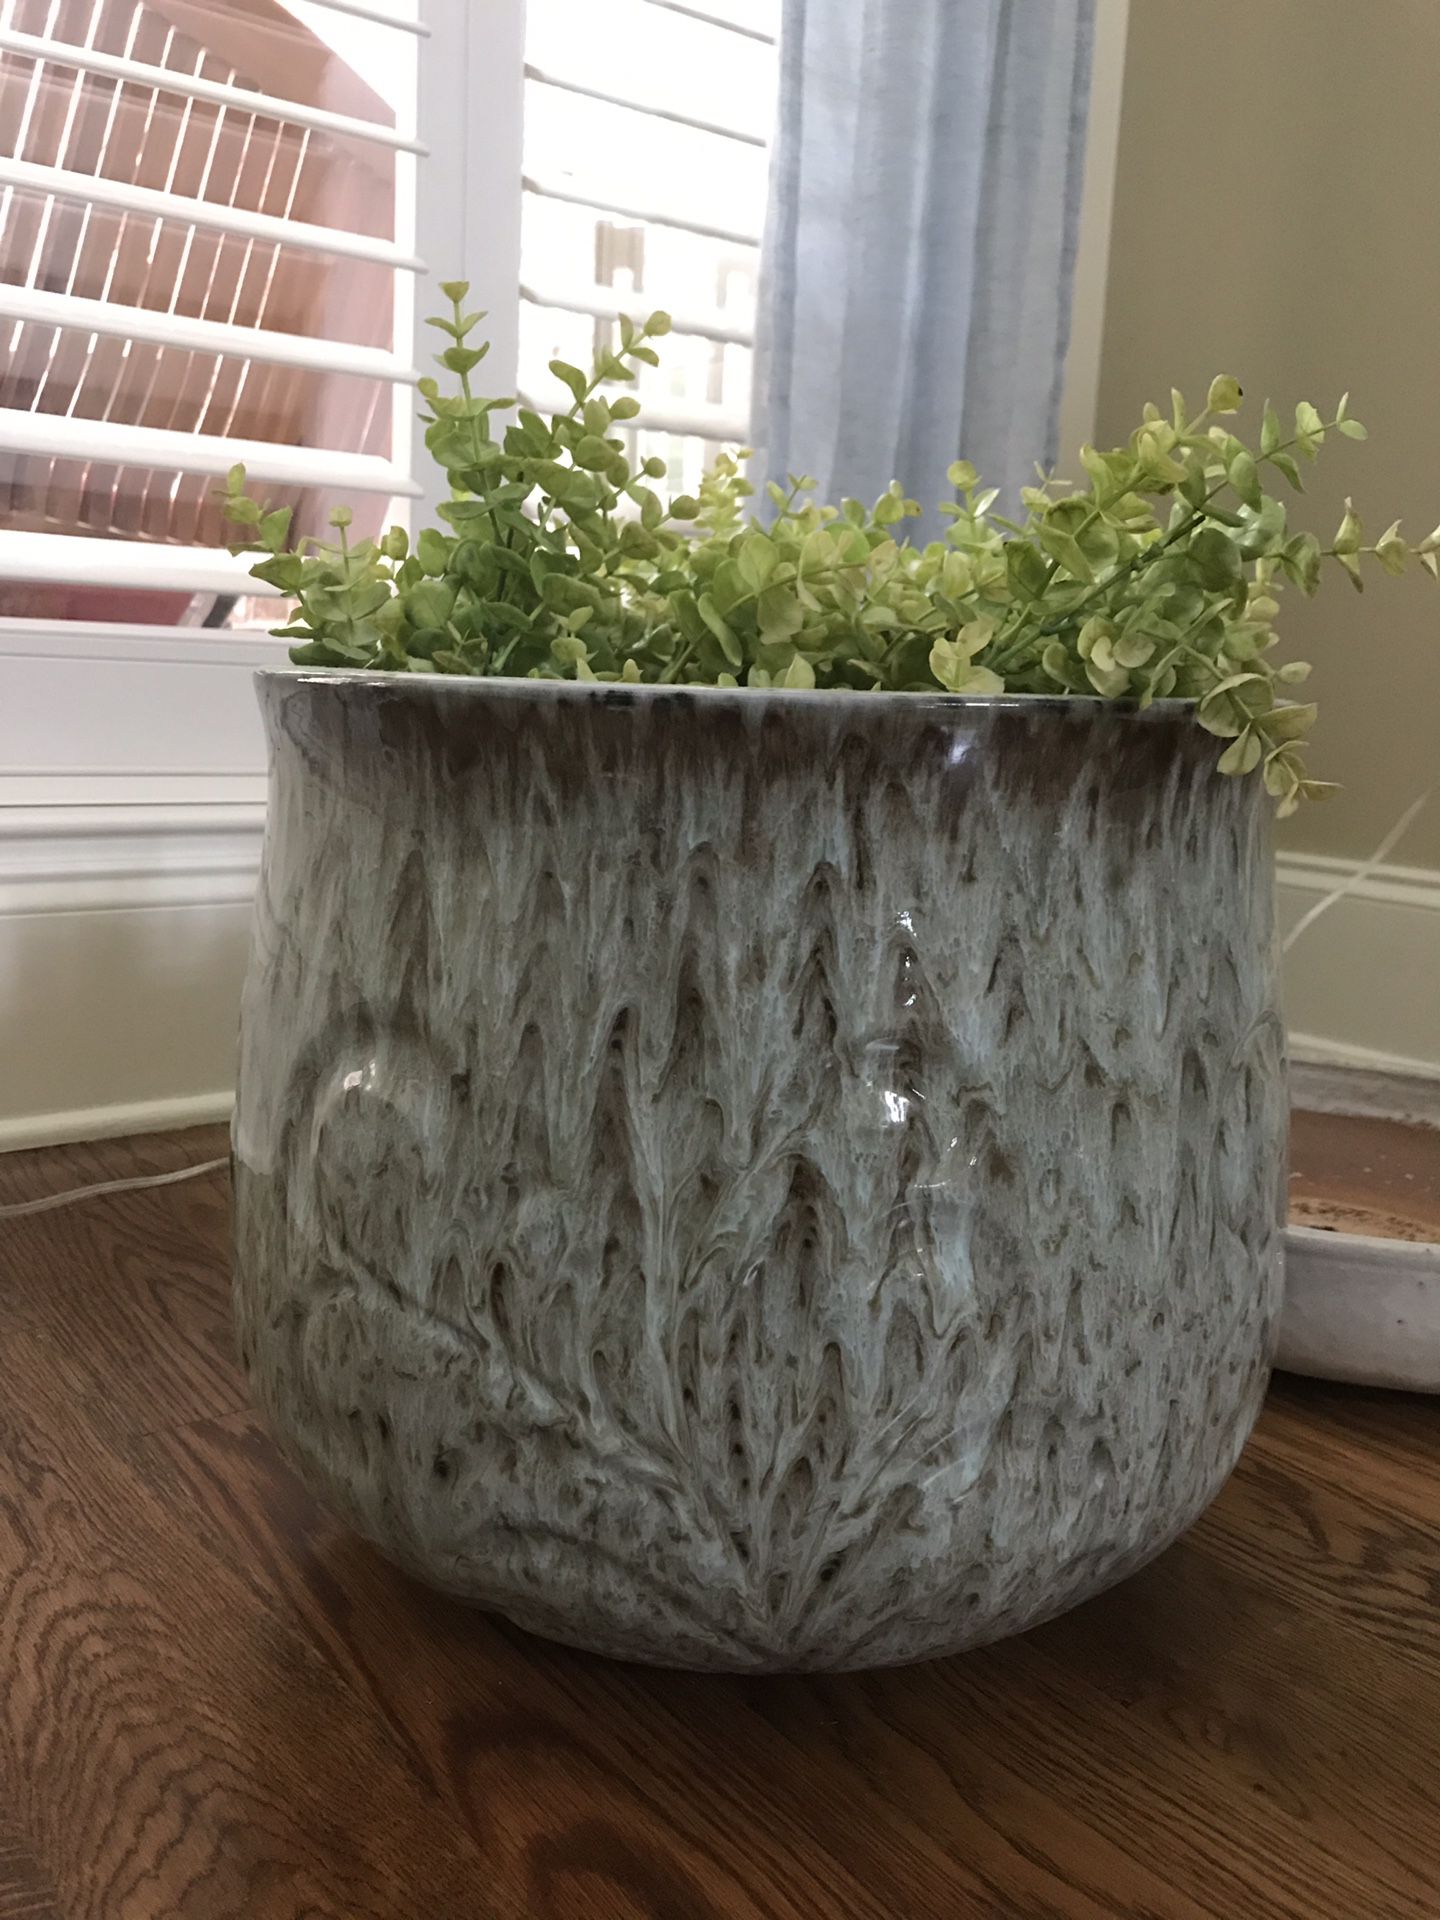 Large glazed ceramic planter